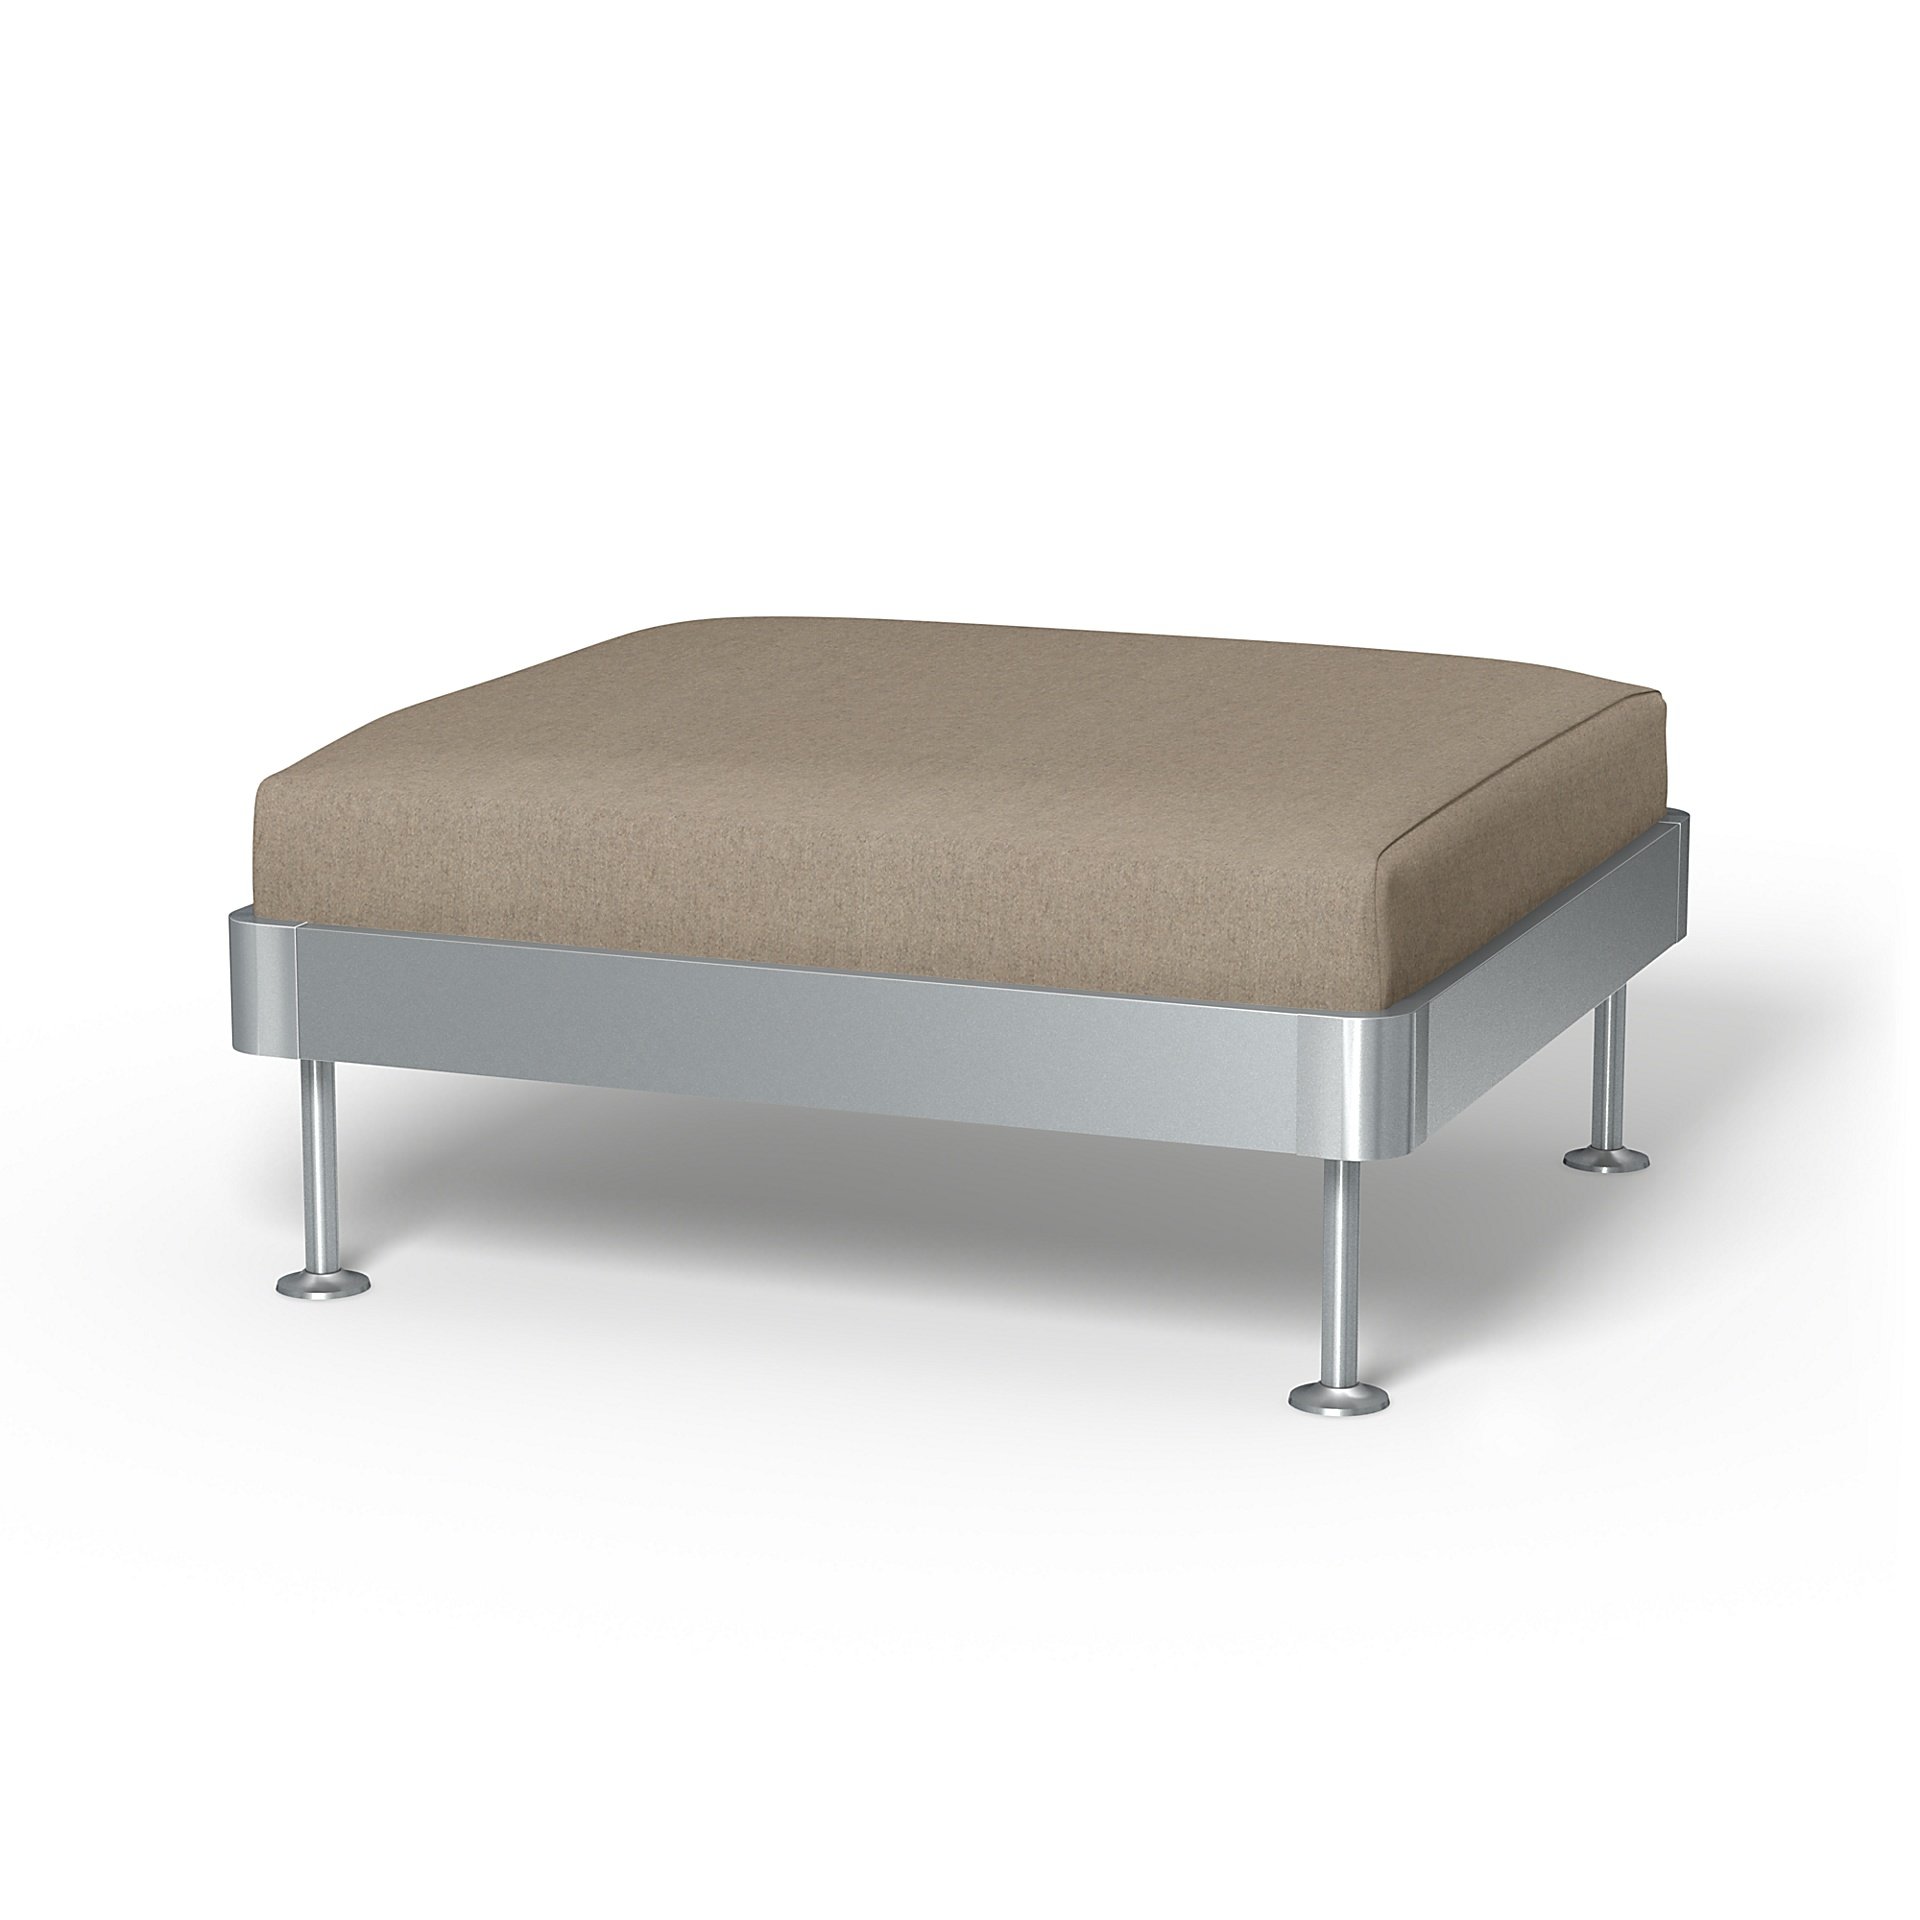 IKEA - Delaktig 1 Seat Platform Cover, Birch, Wool - Bemz